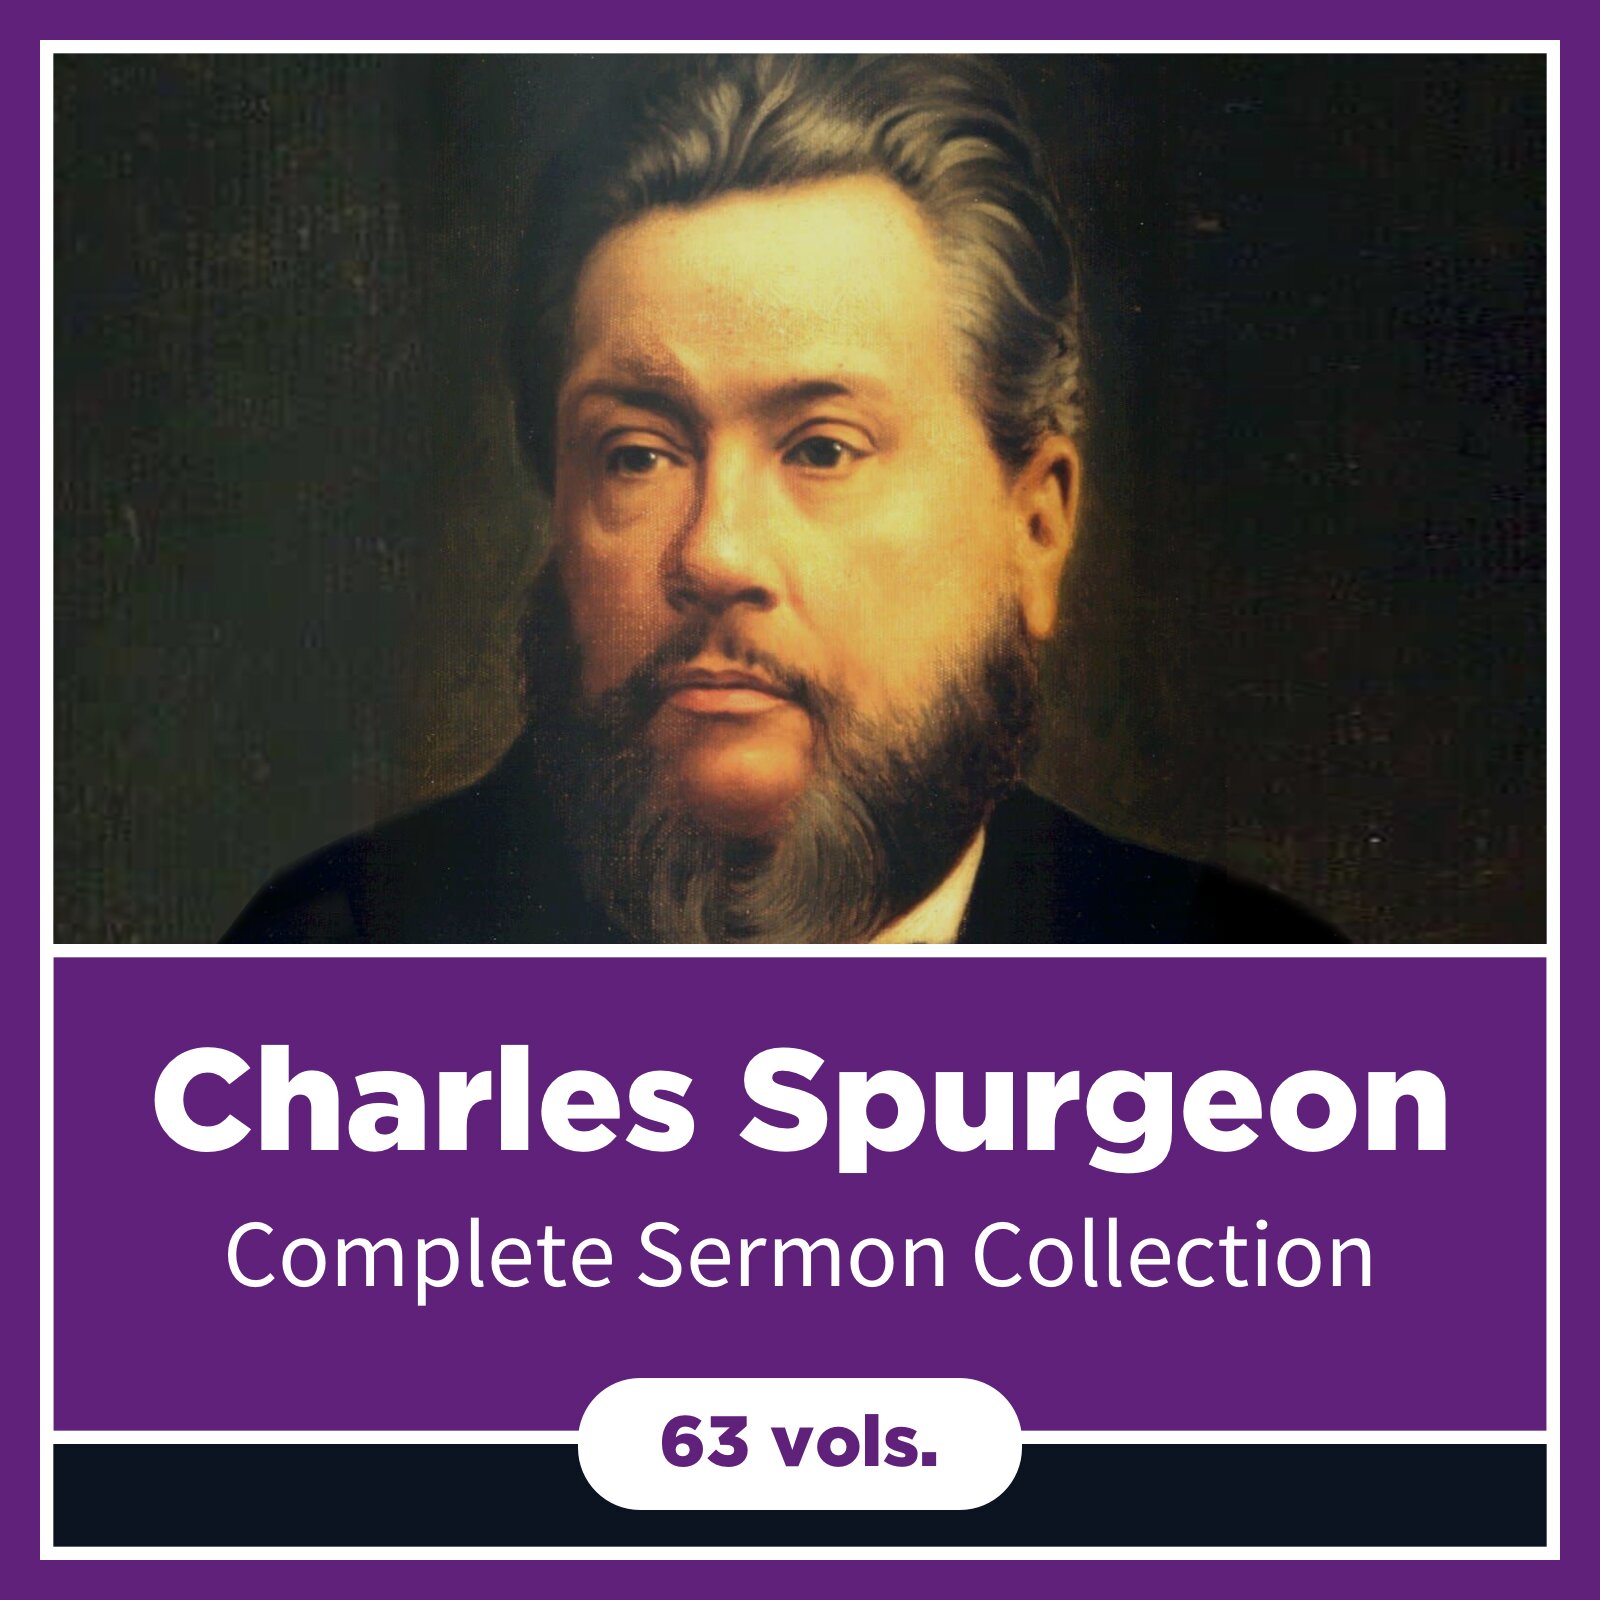 Charles Spurgeon Complete Sermon Collection (63 vols.)